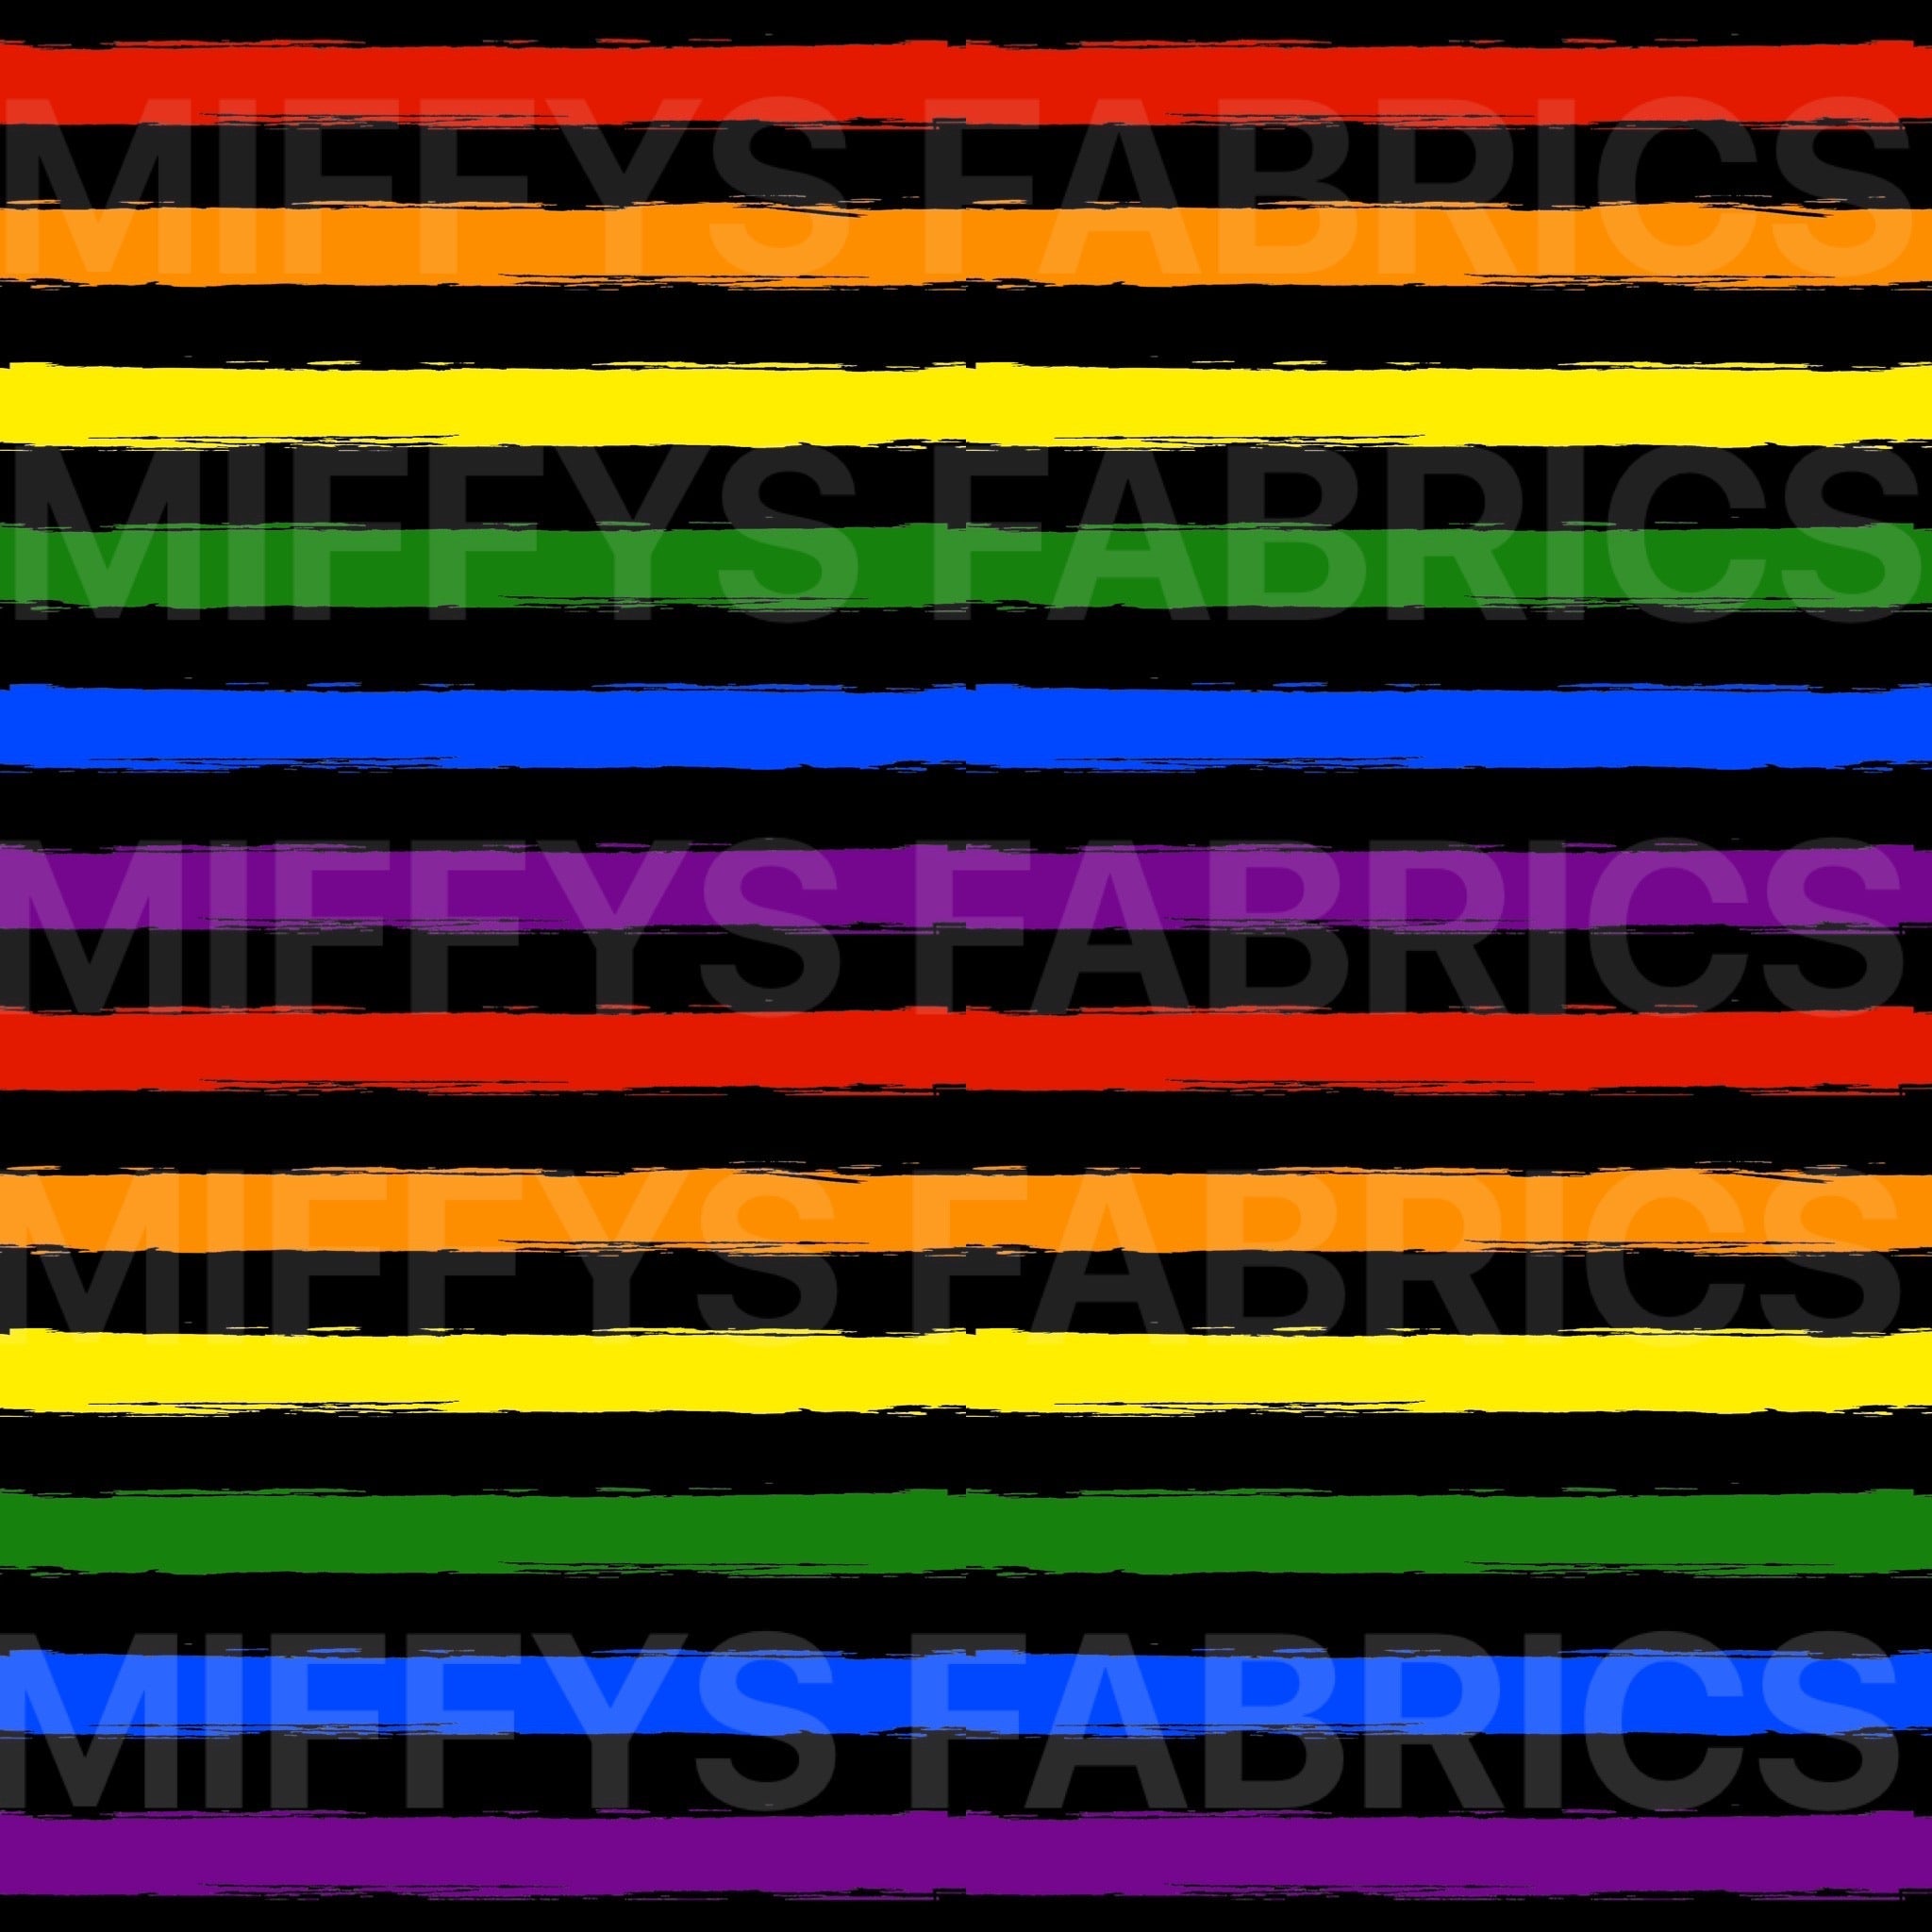 Pre-order : Co-ords Sketchy Stripe Rainbow